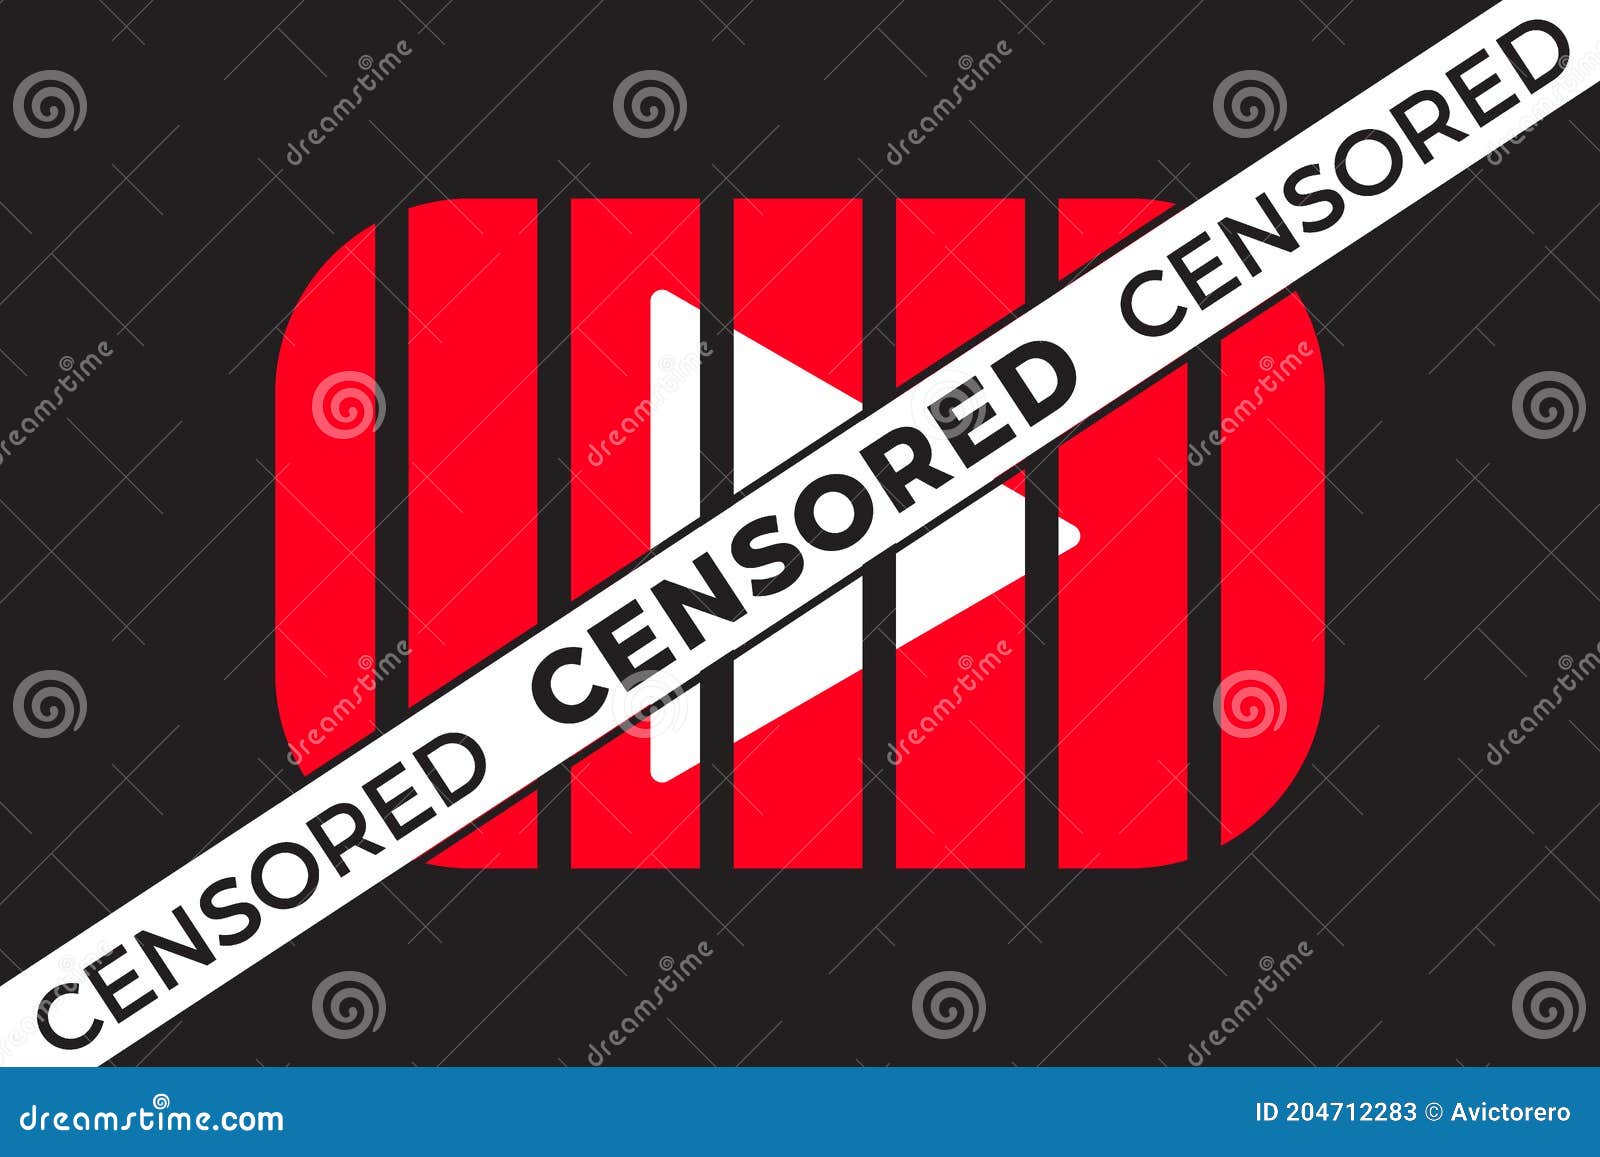 censored video social media icon, channel video content